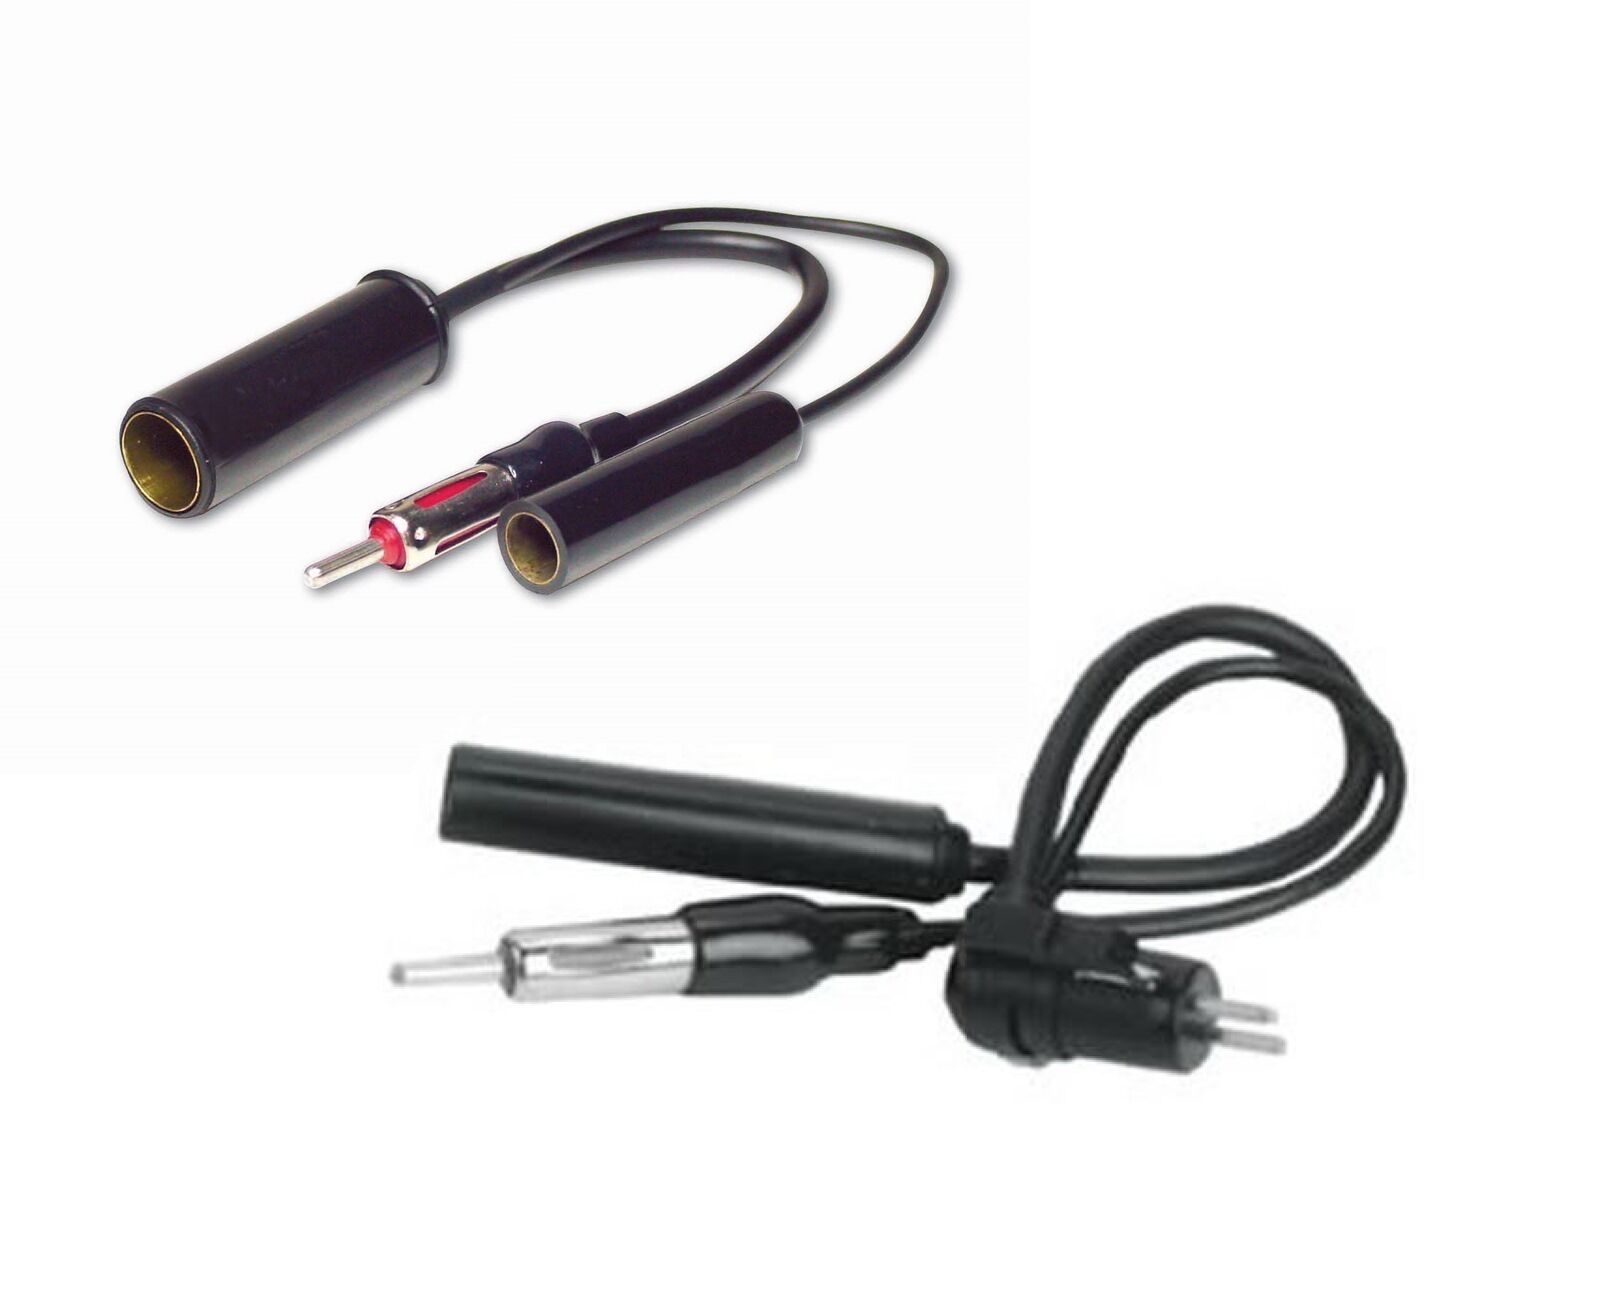 Scosche NDAKB Antenna Adapter Adaptor Cable Kit Add FM Modulator